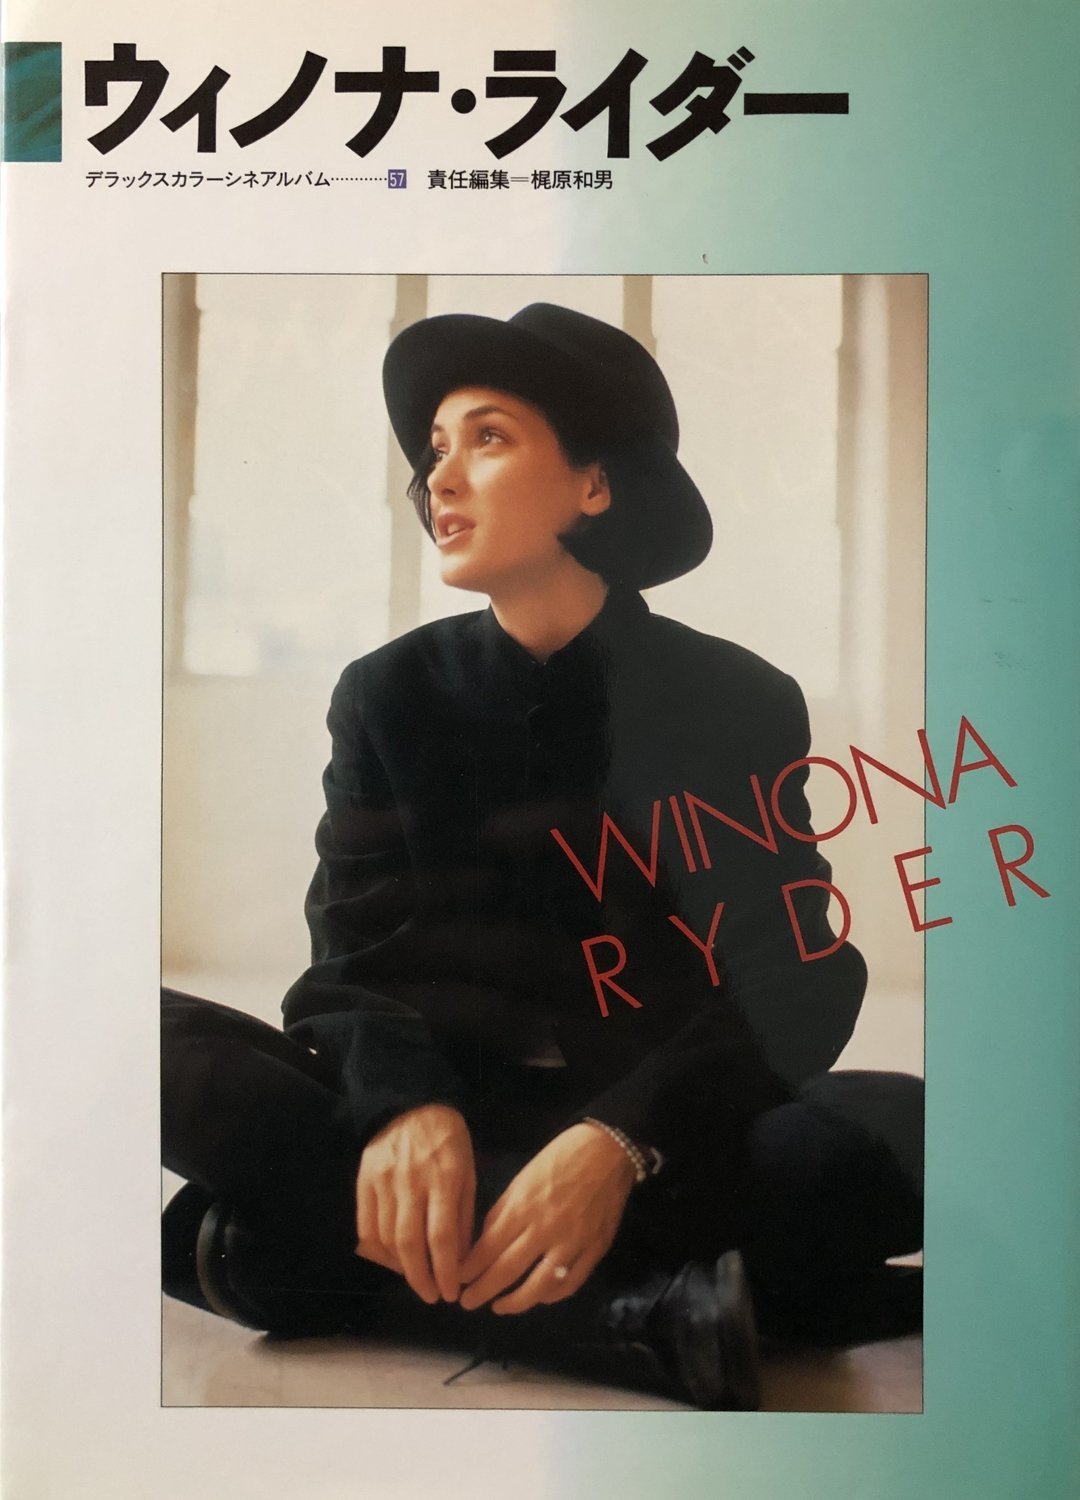 Winona Ryder Icon Book